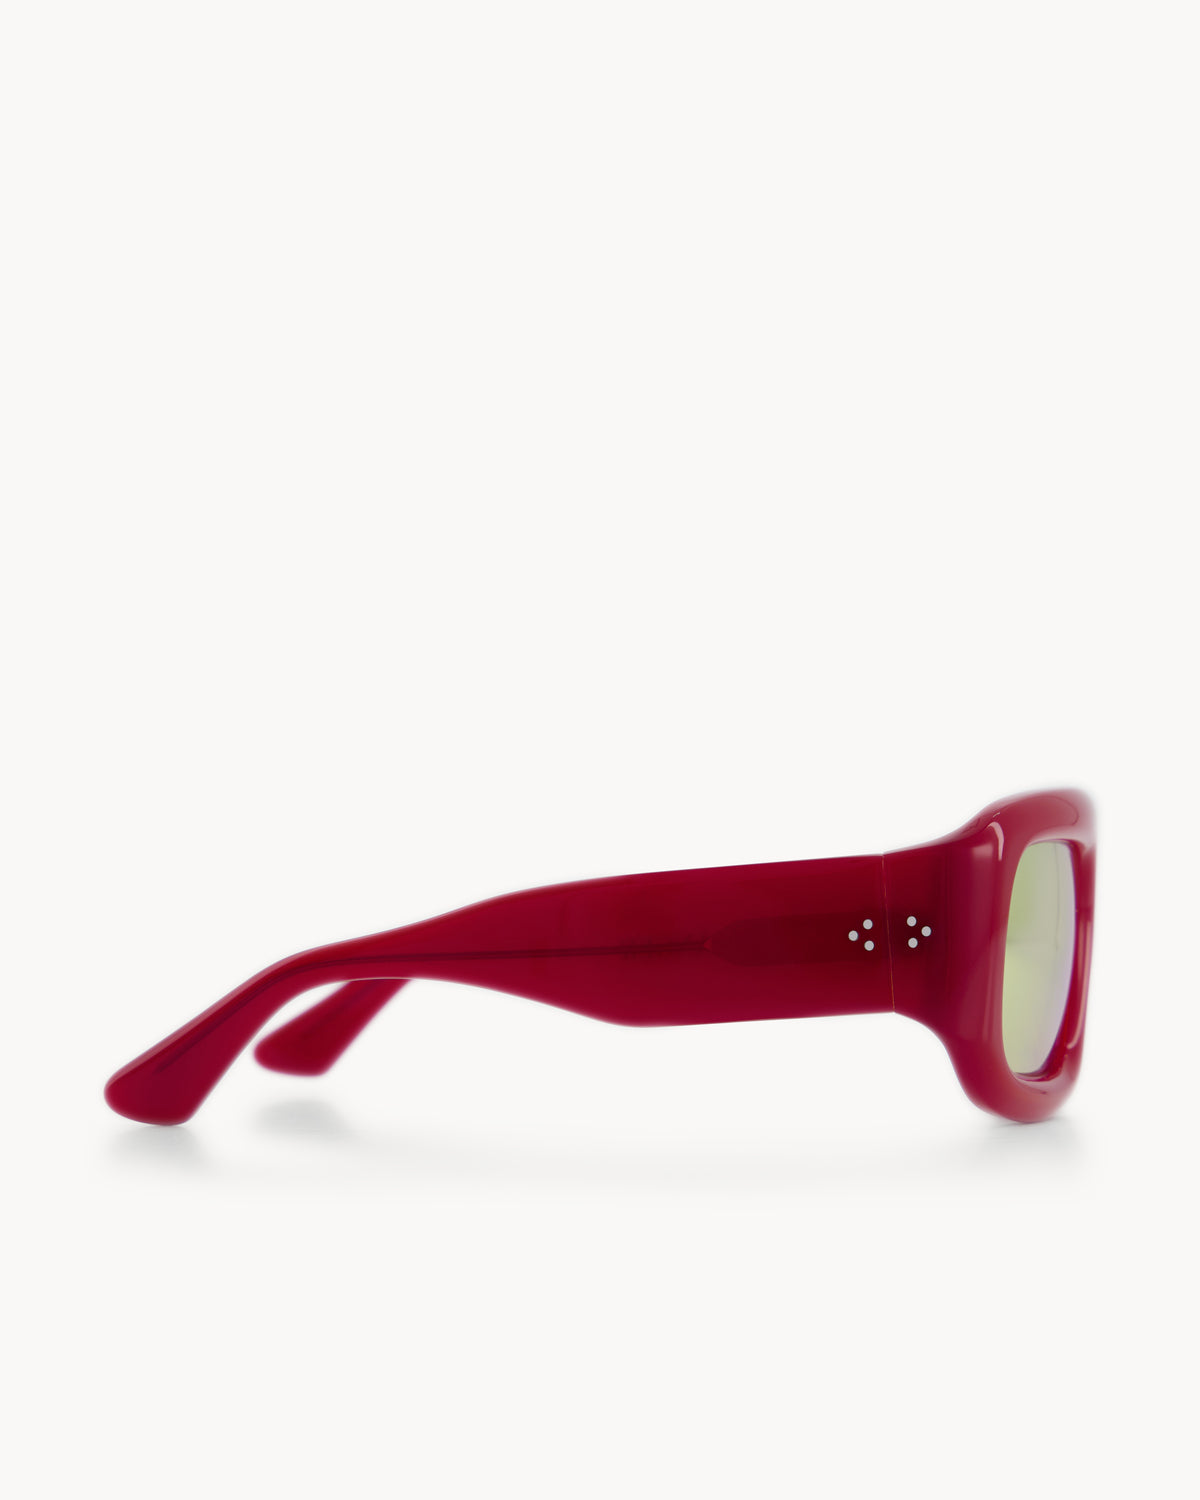 Port Tanger Mauretania Sunglasses in Incense Red Acetate and Dhahab Lenses 4